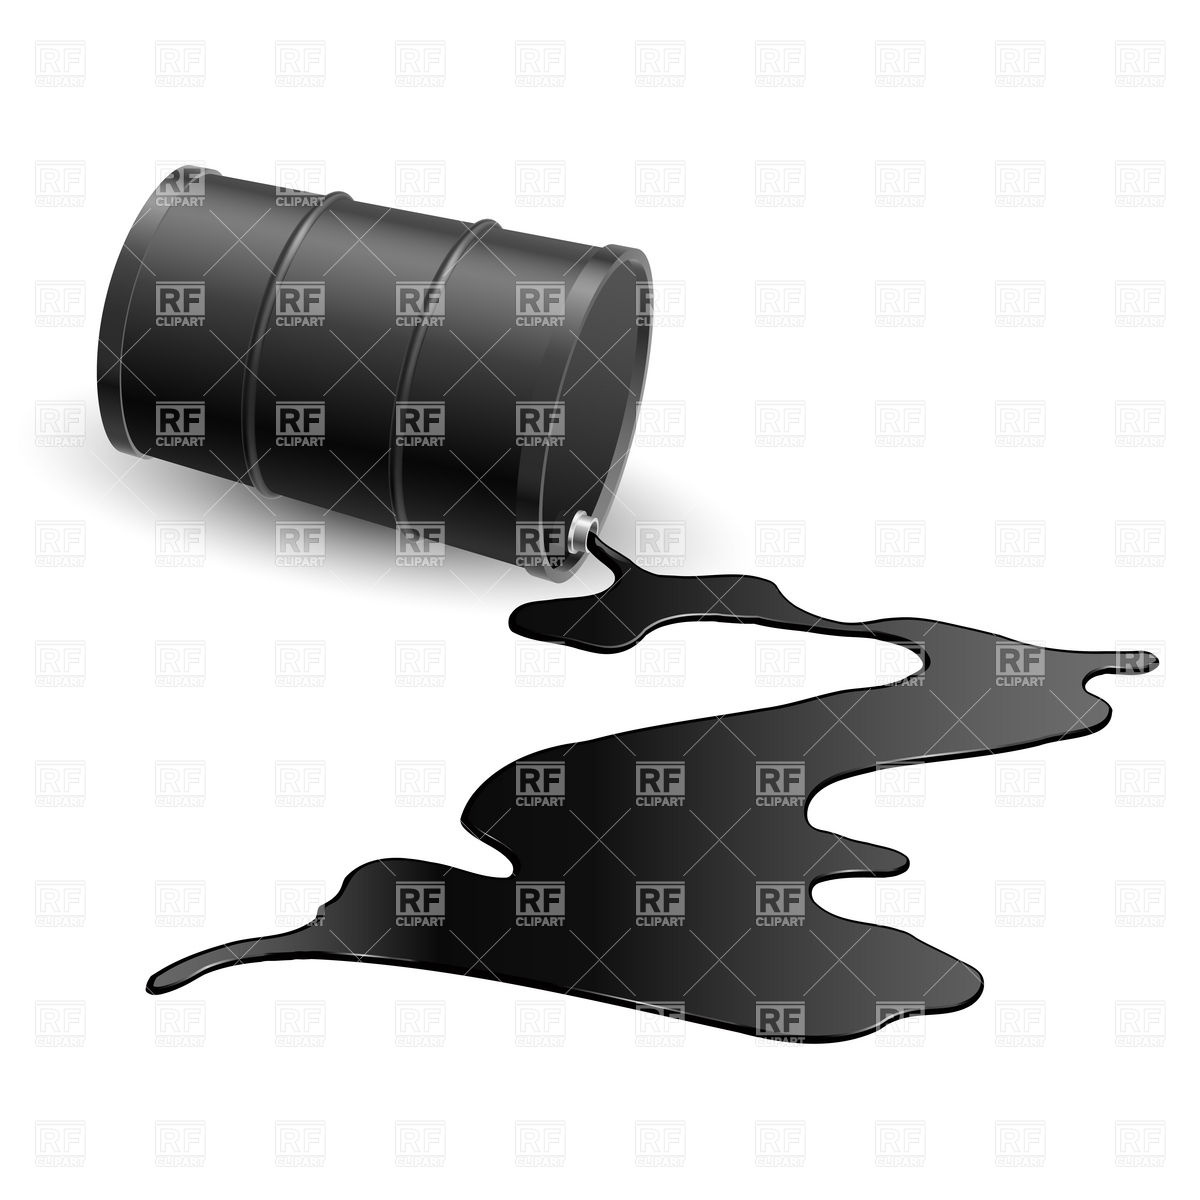 Oil Barrel And Spilled Black Liquid 6950 Download Royalty Free